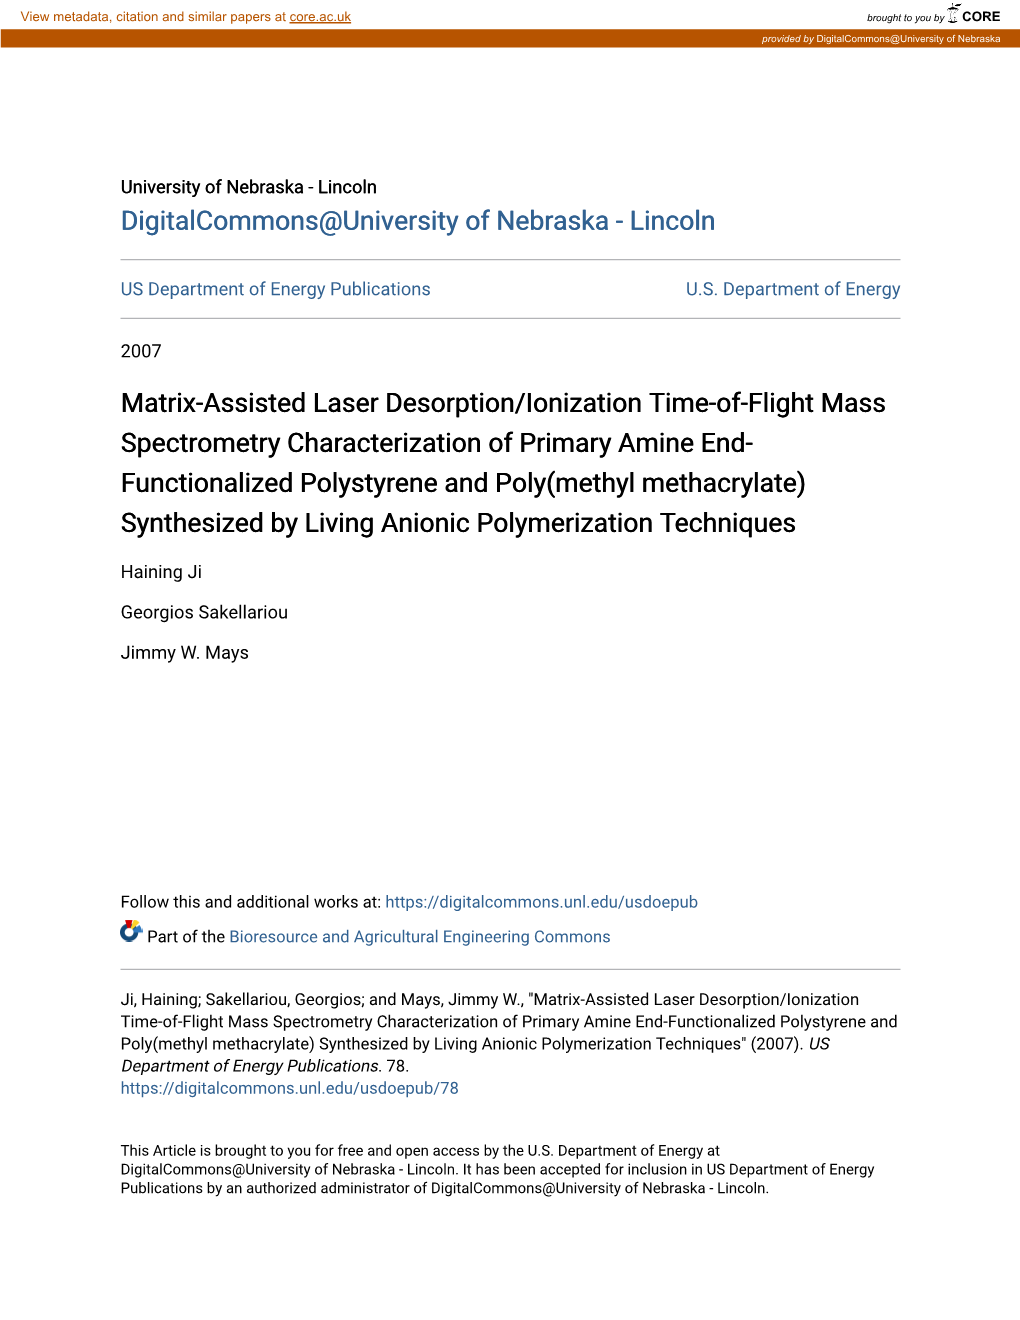 Matrix-Assisted Laser Desorption/Ionization Time-Of-Flight